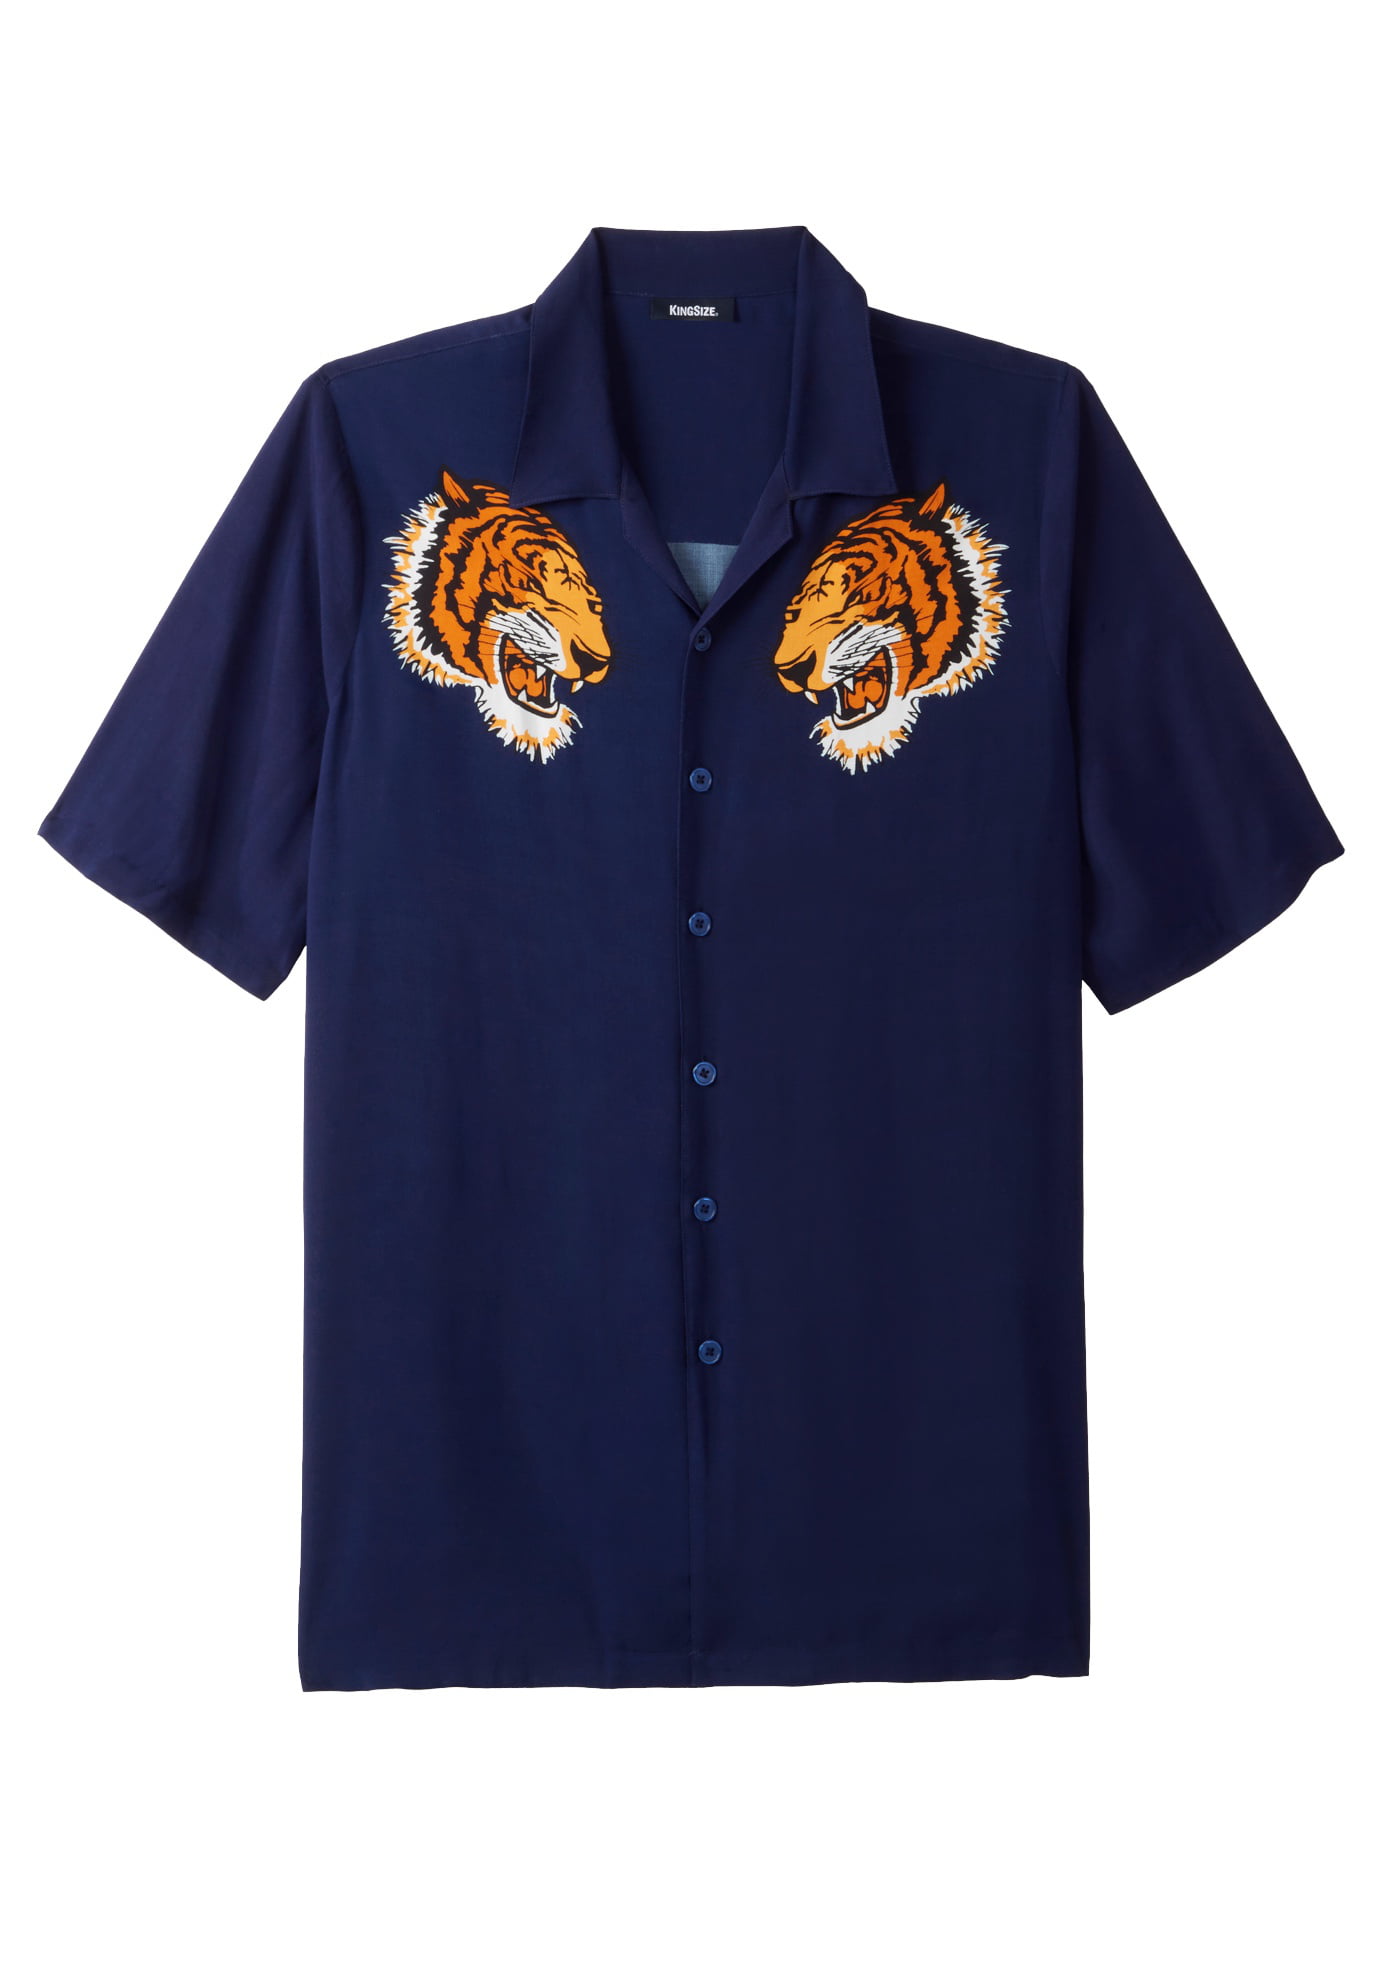 Kingsize Men's Big & Tall Short-Sleeve Colorblock Rayon Shirt - Walmart.com